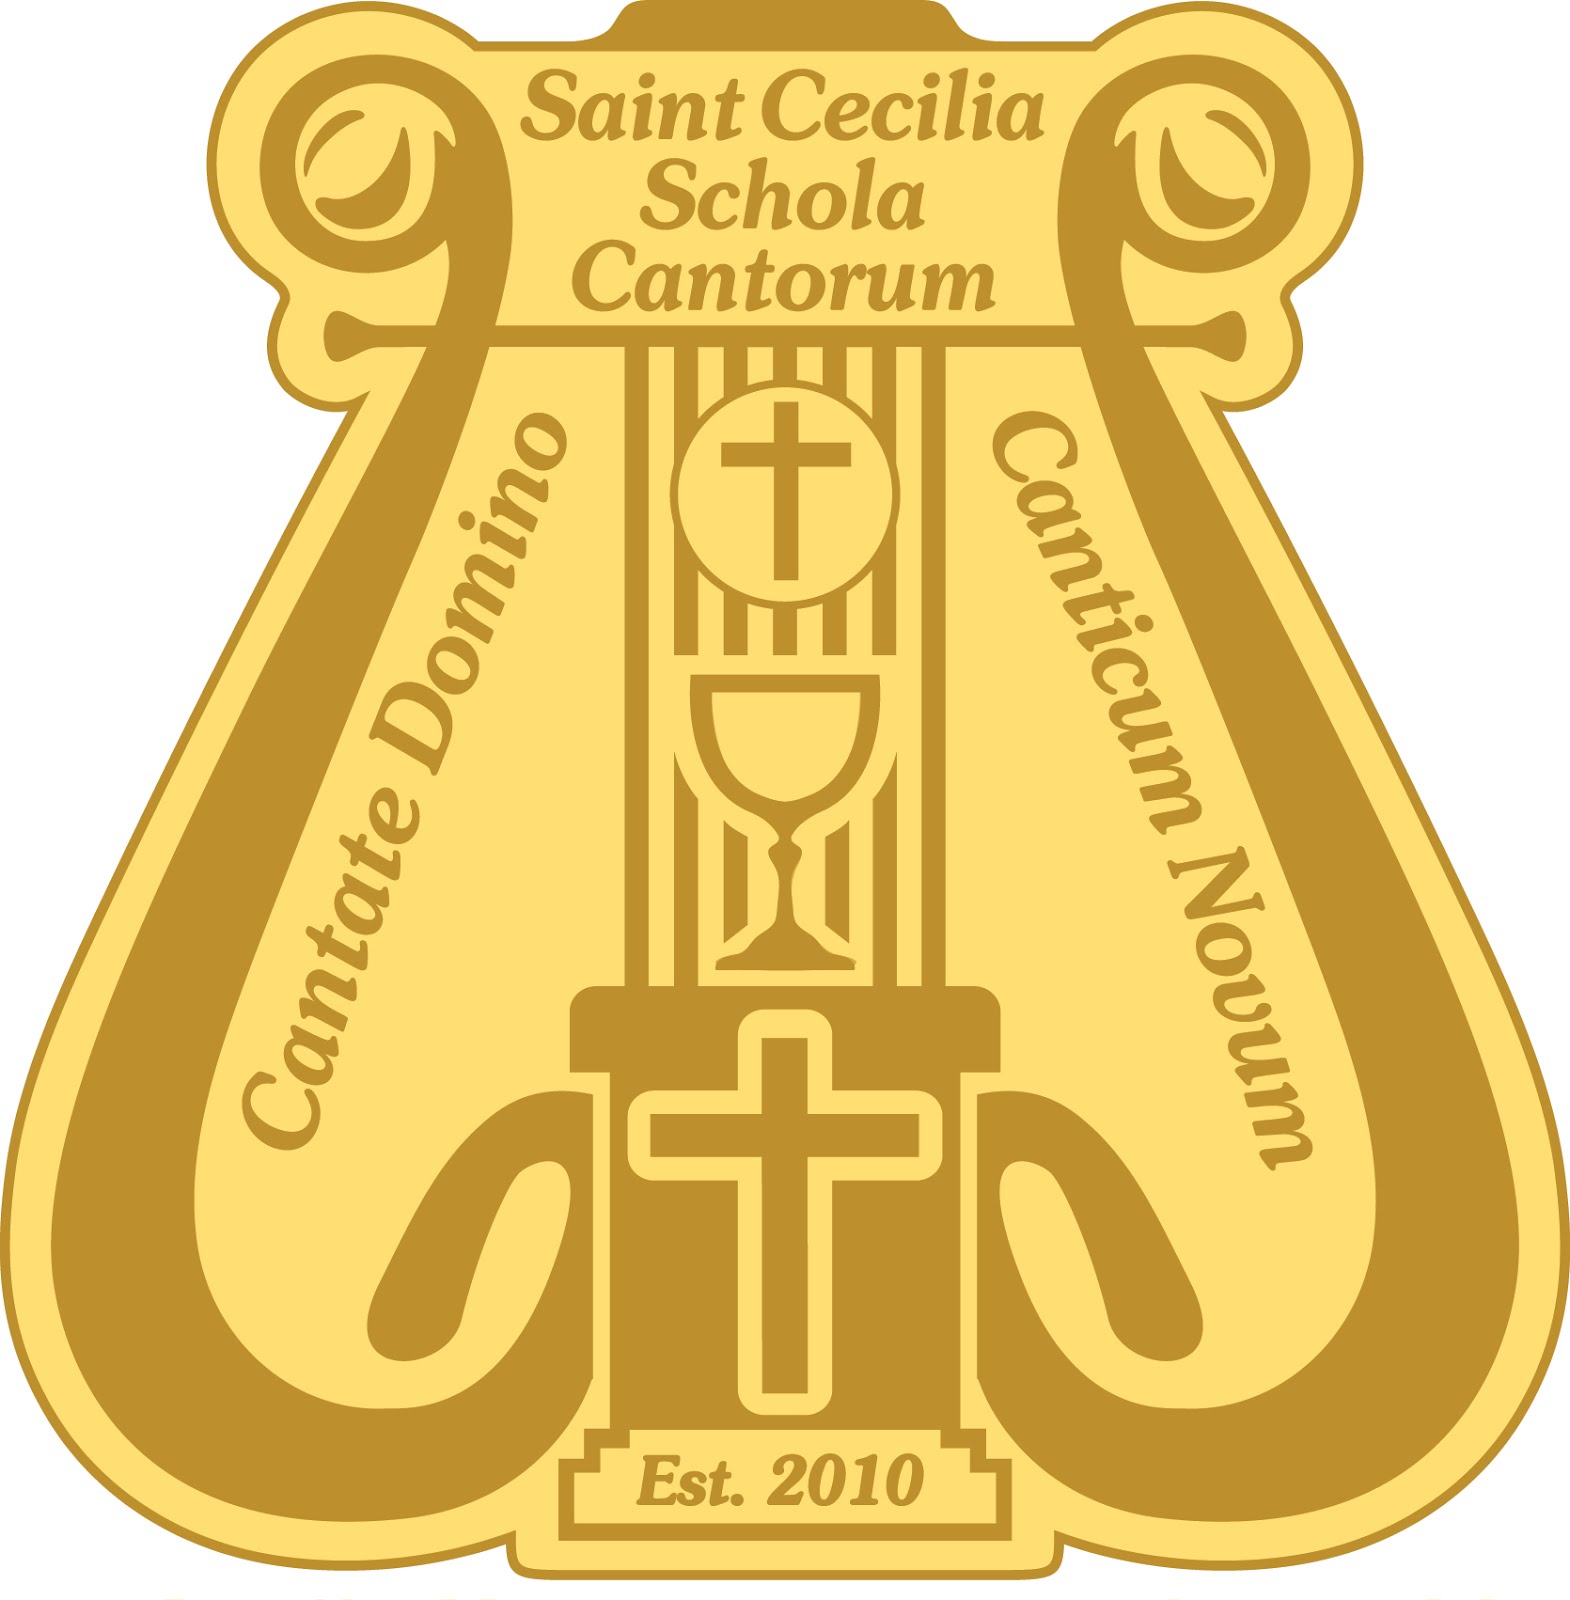 St. Cecilia Schola Cantorum